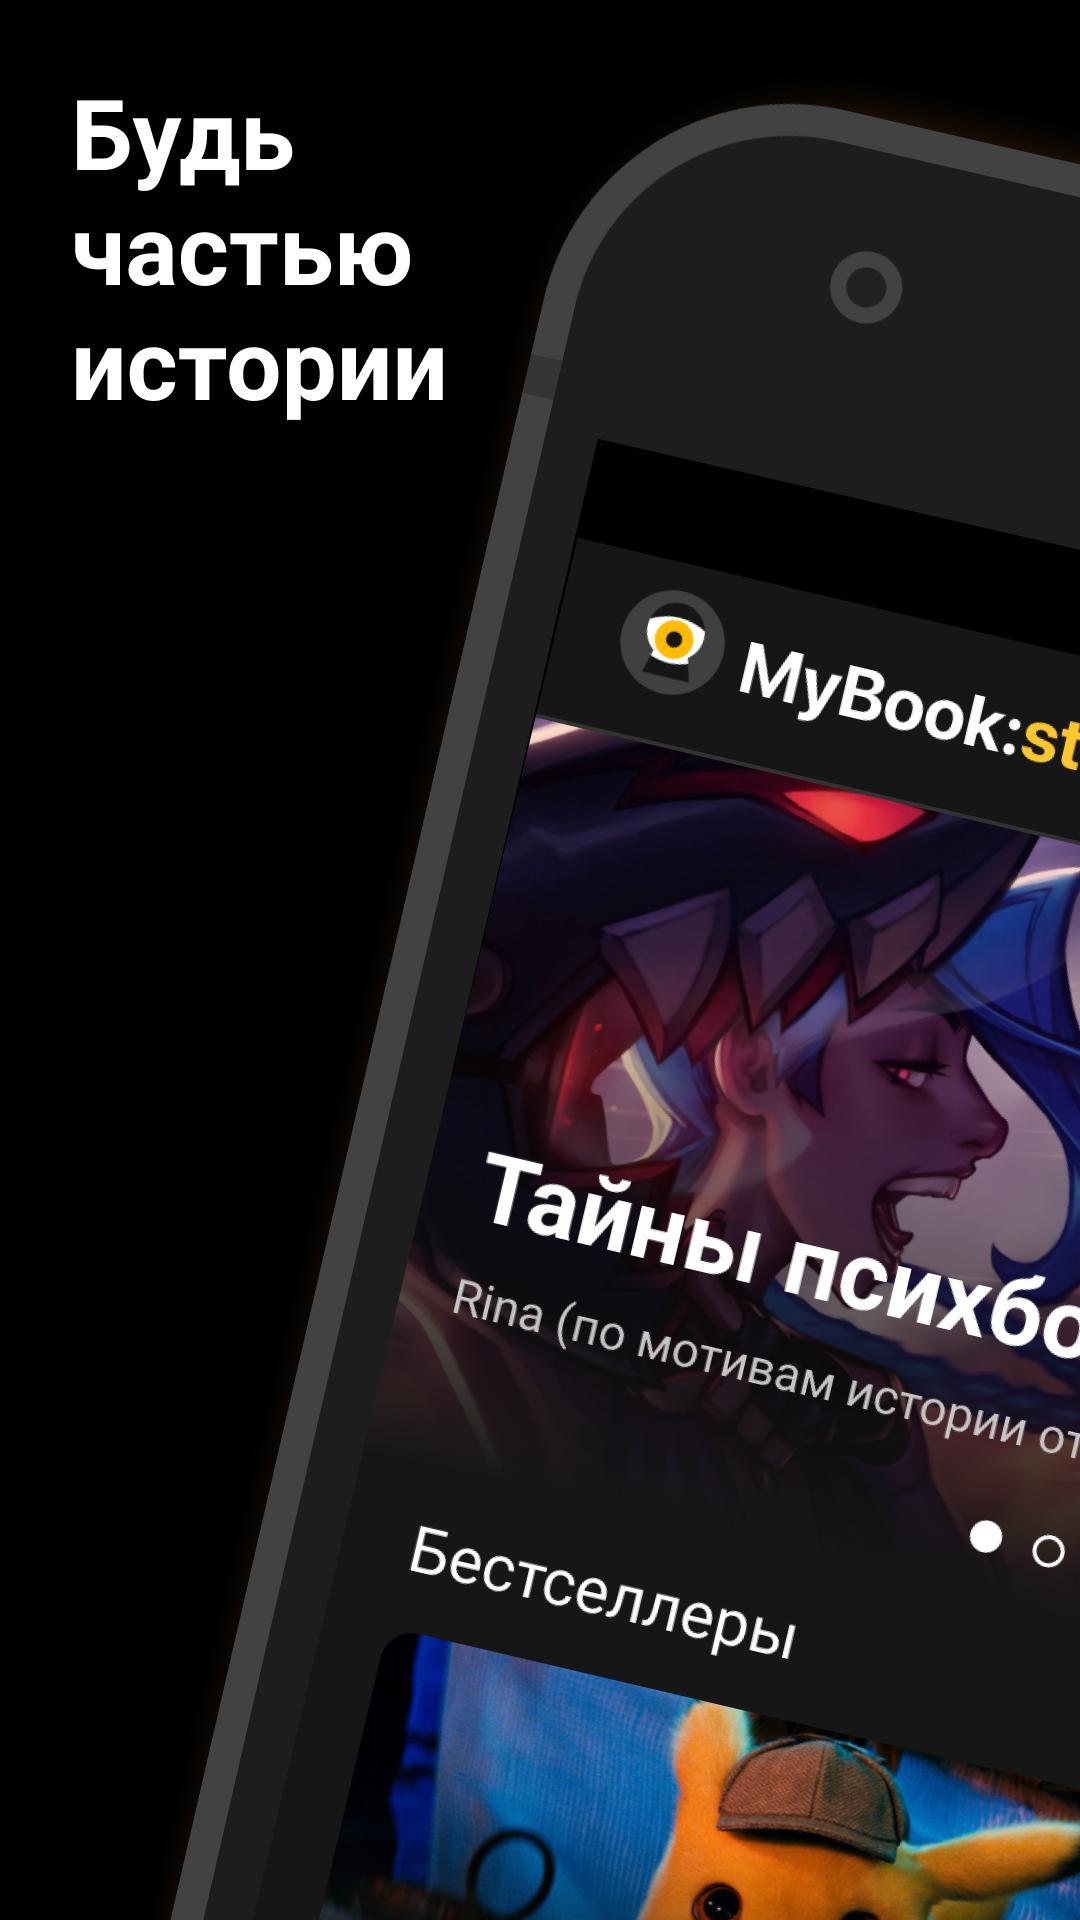 MyBook: Story 3.0.7